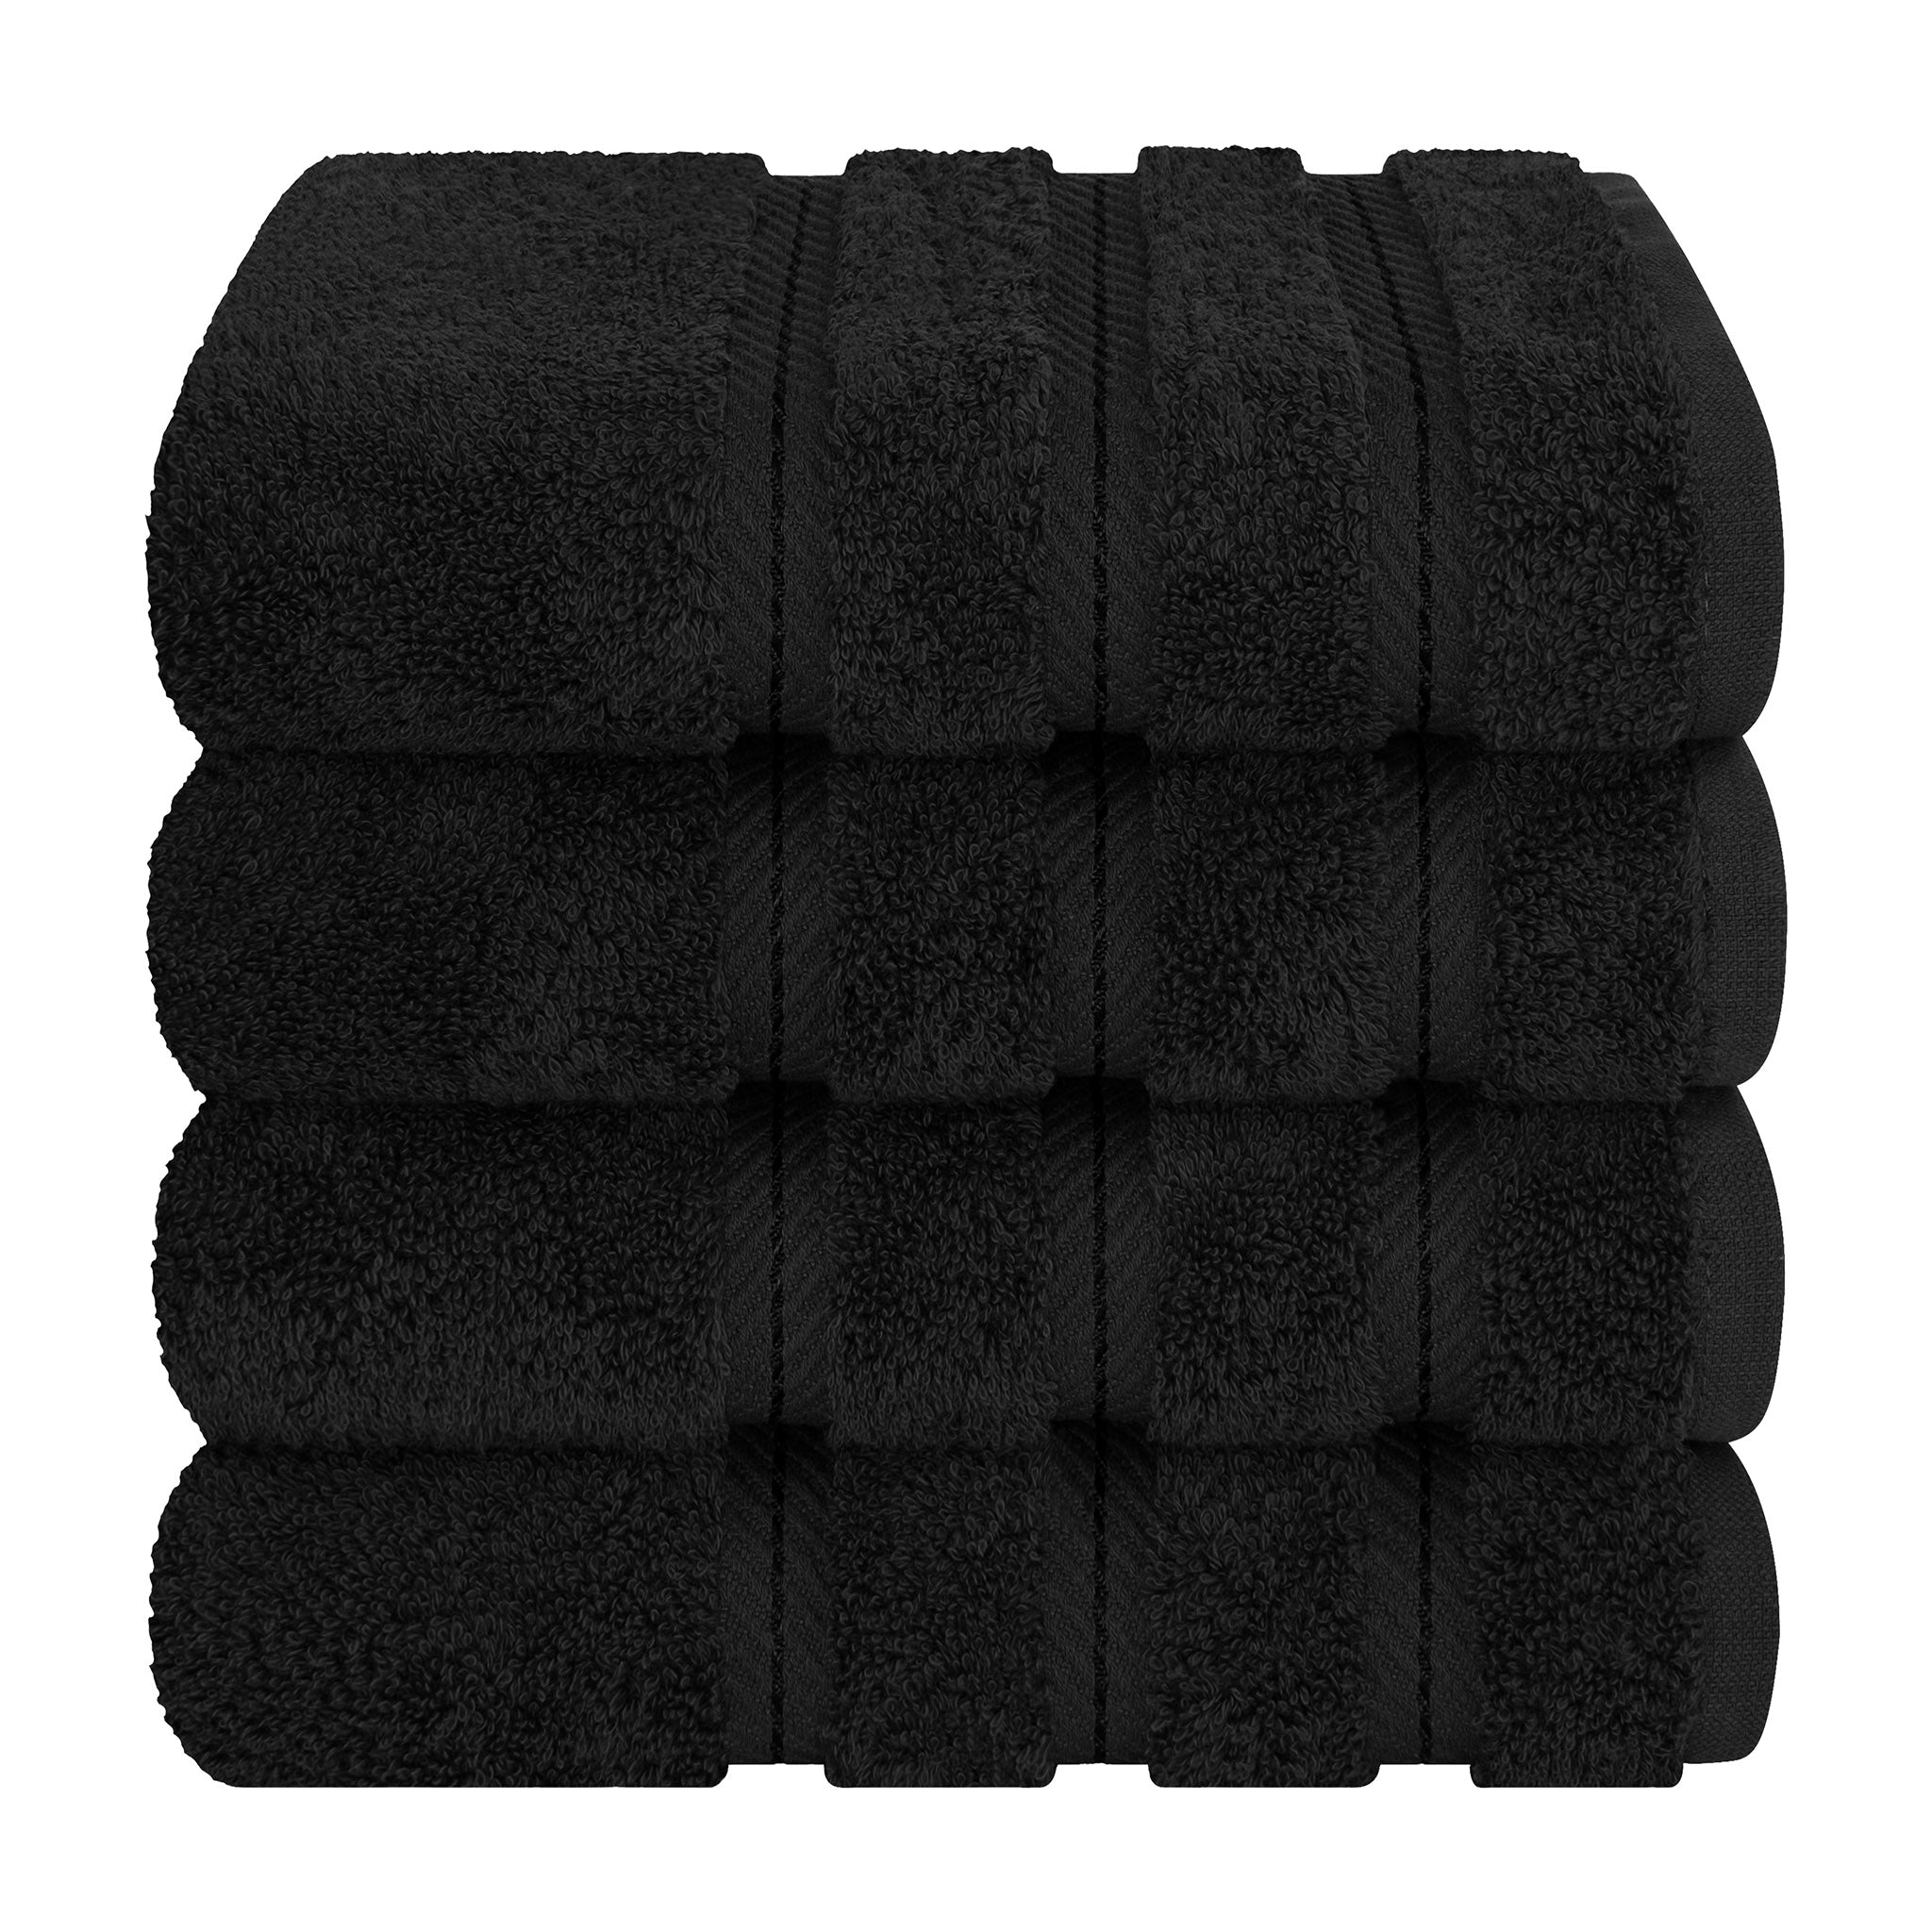  American Soft Linen 100% Turkish Cotton 4 Pack Hand Towel Set  black-7